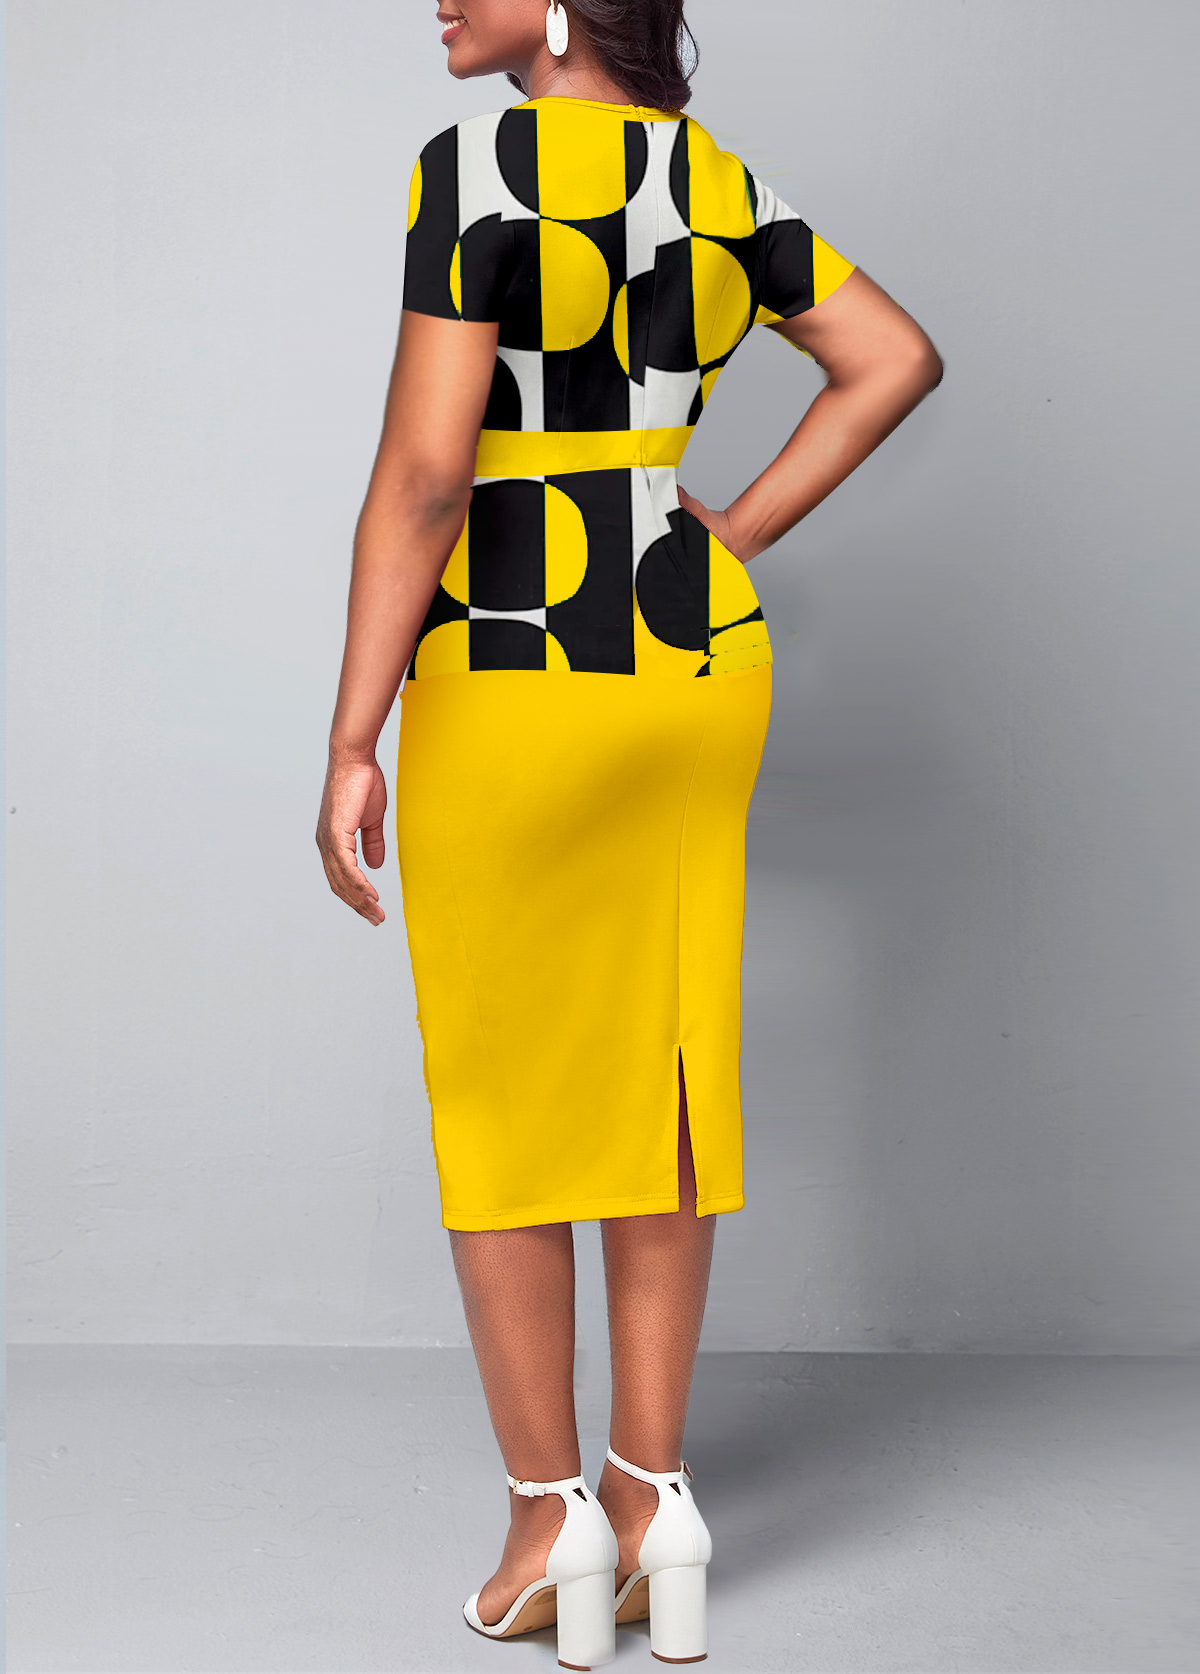 Geometric Print Round Neck Yellow Short Sleeve Dress